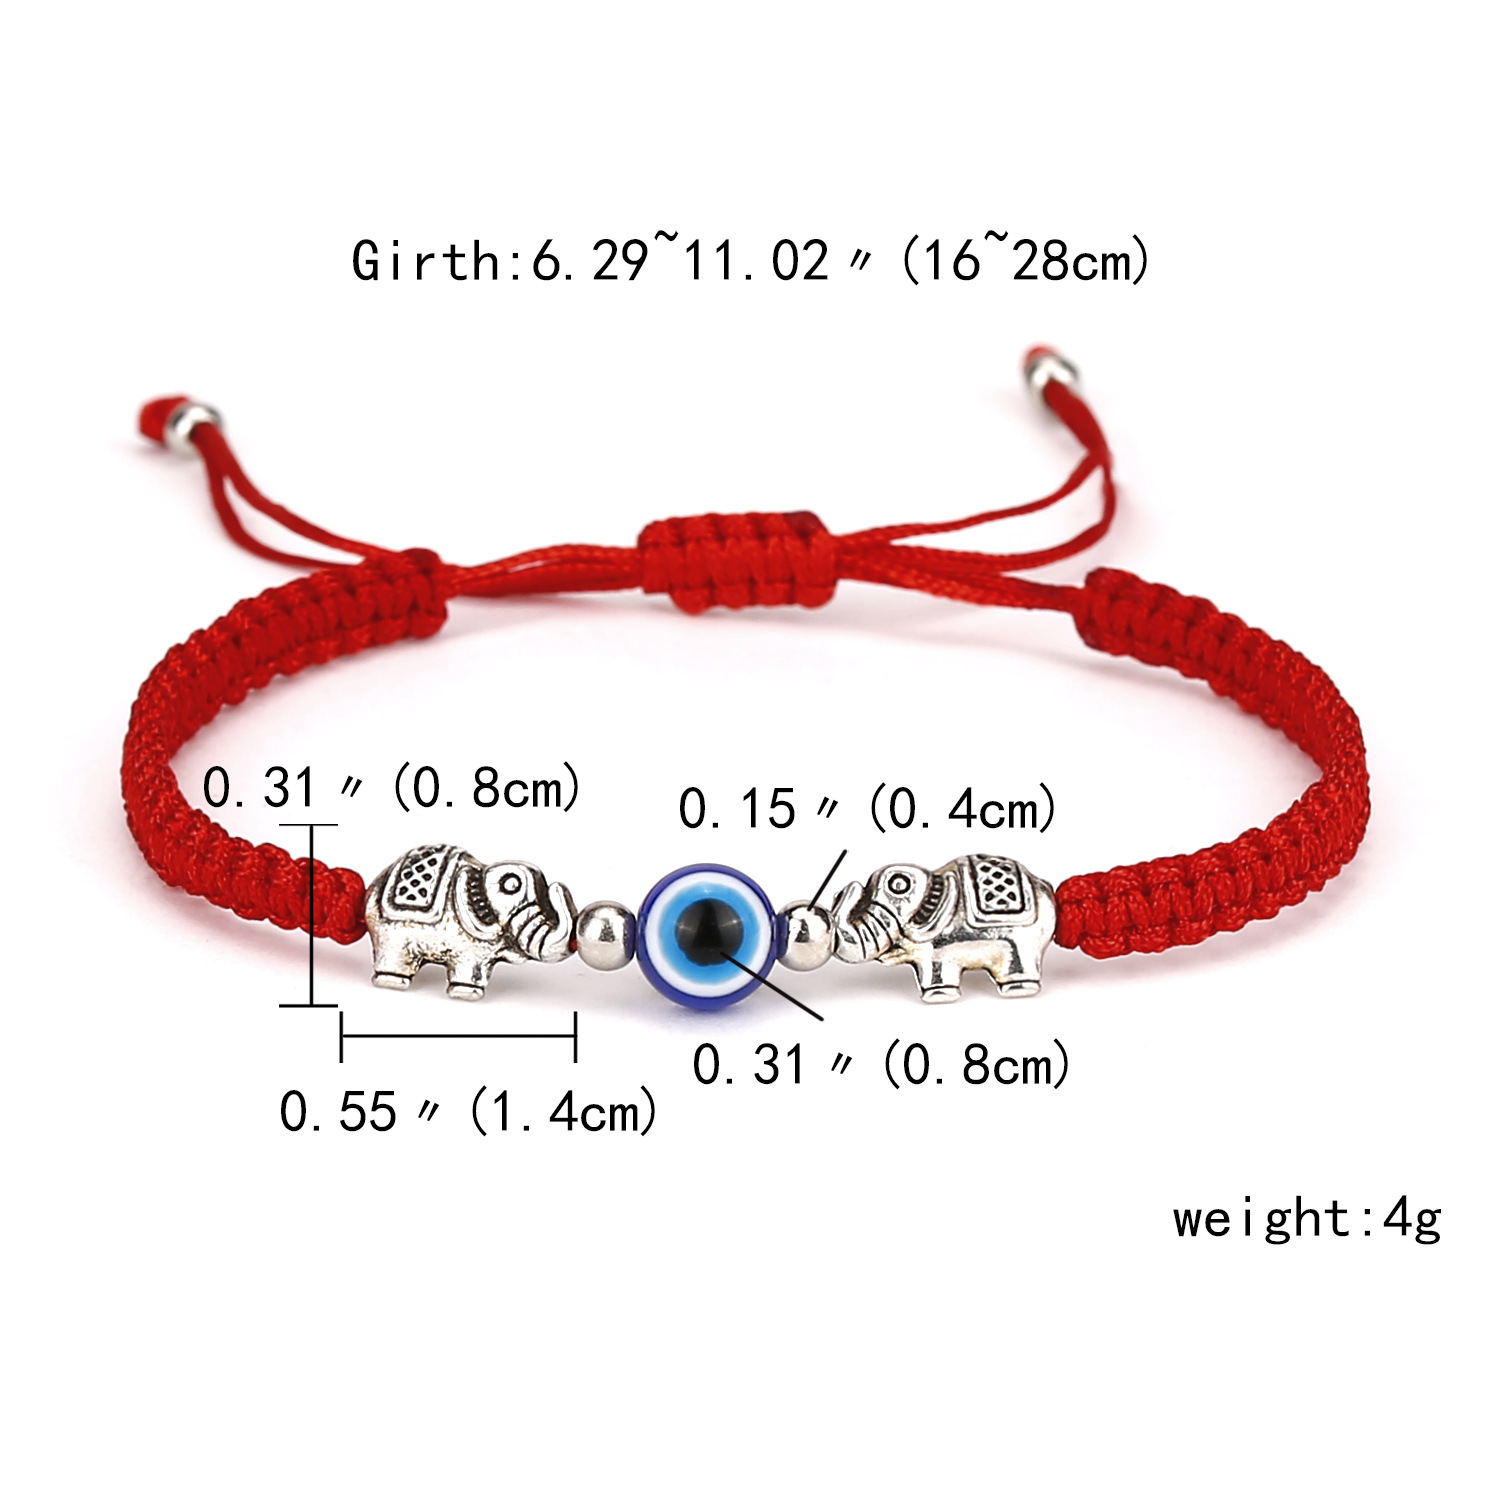 Mode verstellbares Armband kreatives neues blaues Auge Armband bses Auge rotes Seil geflochtenes Armbandpicture9